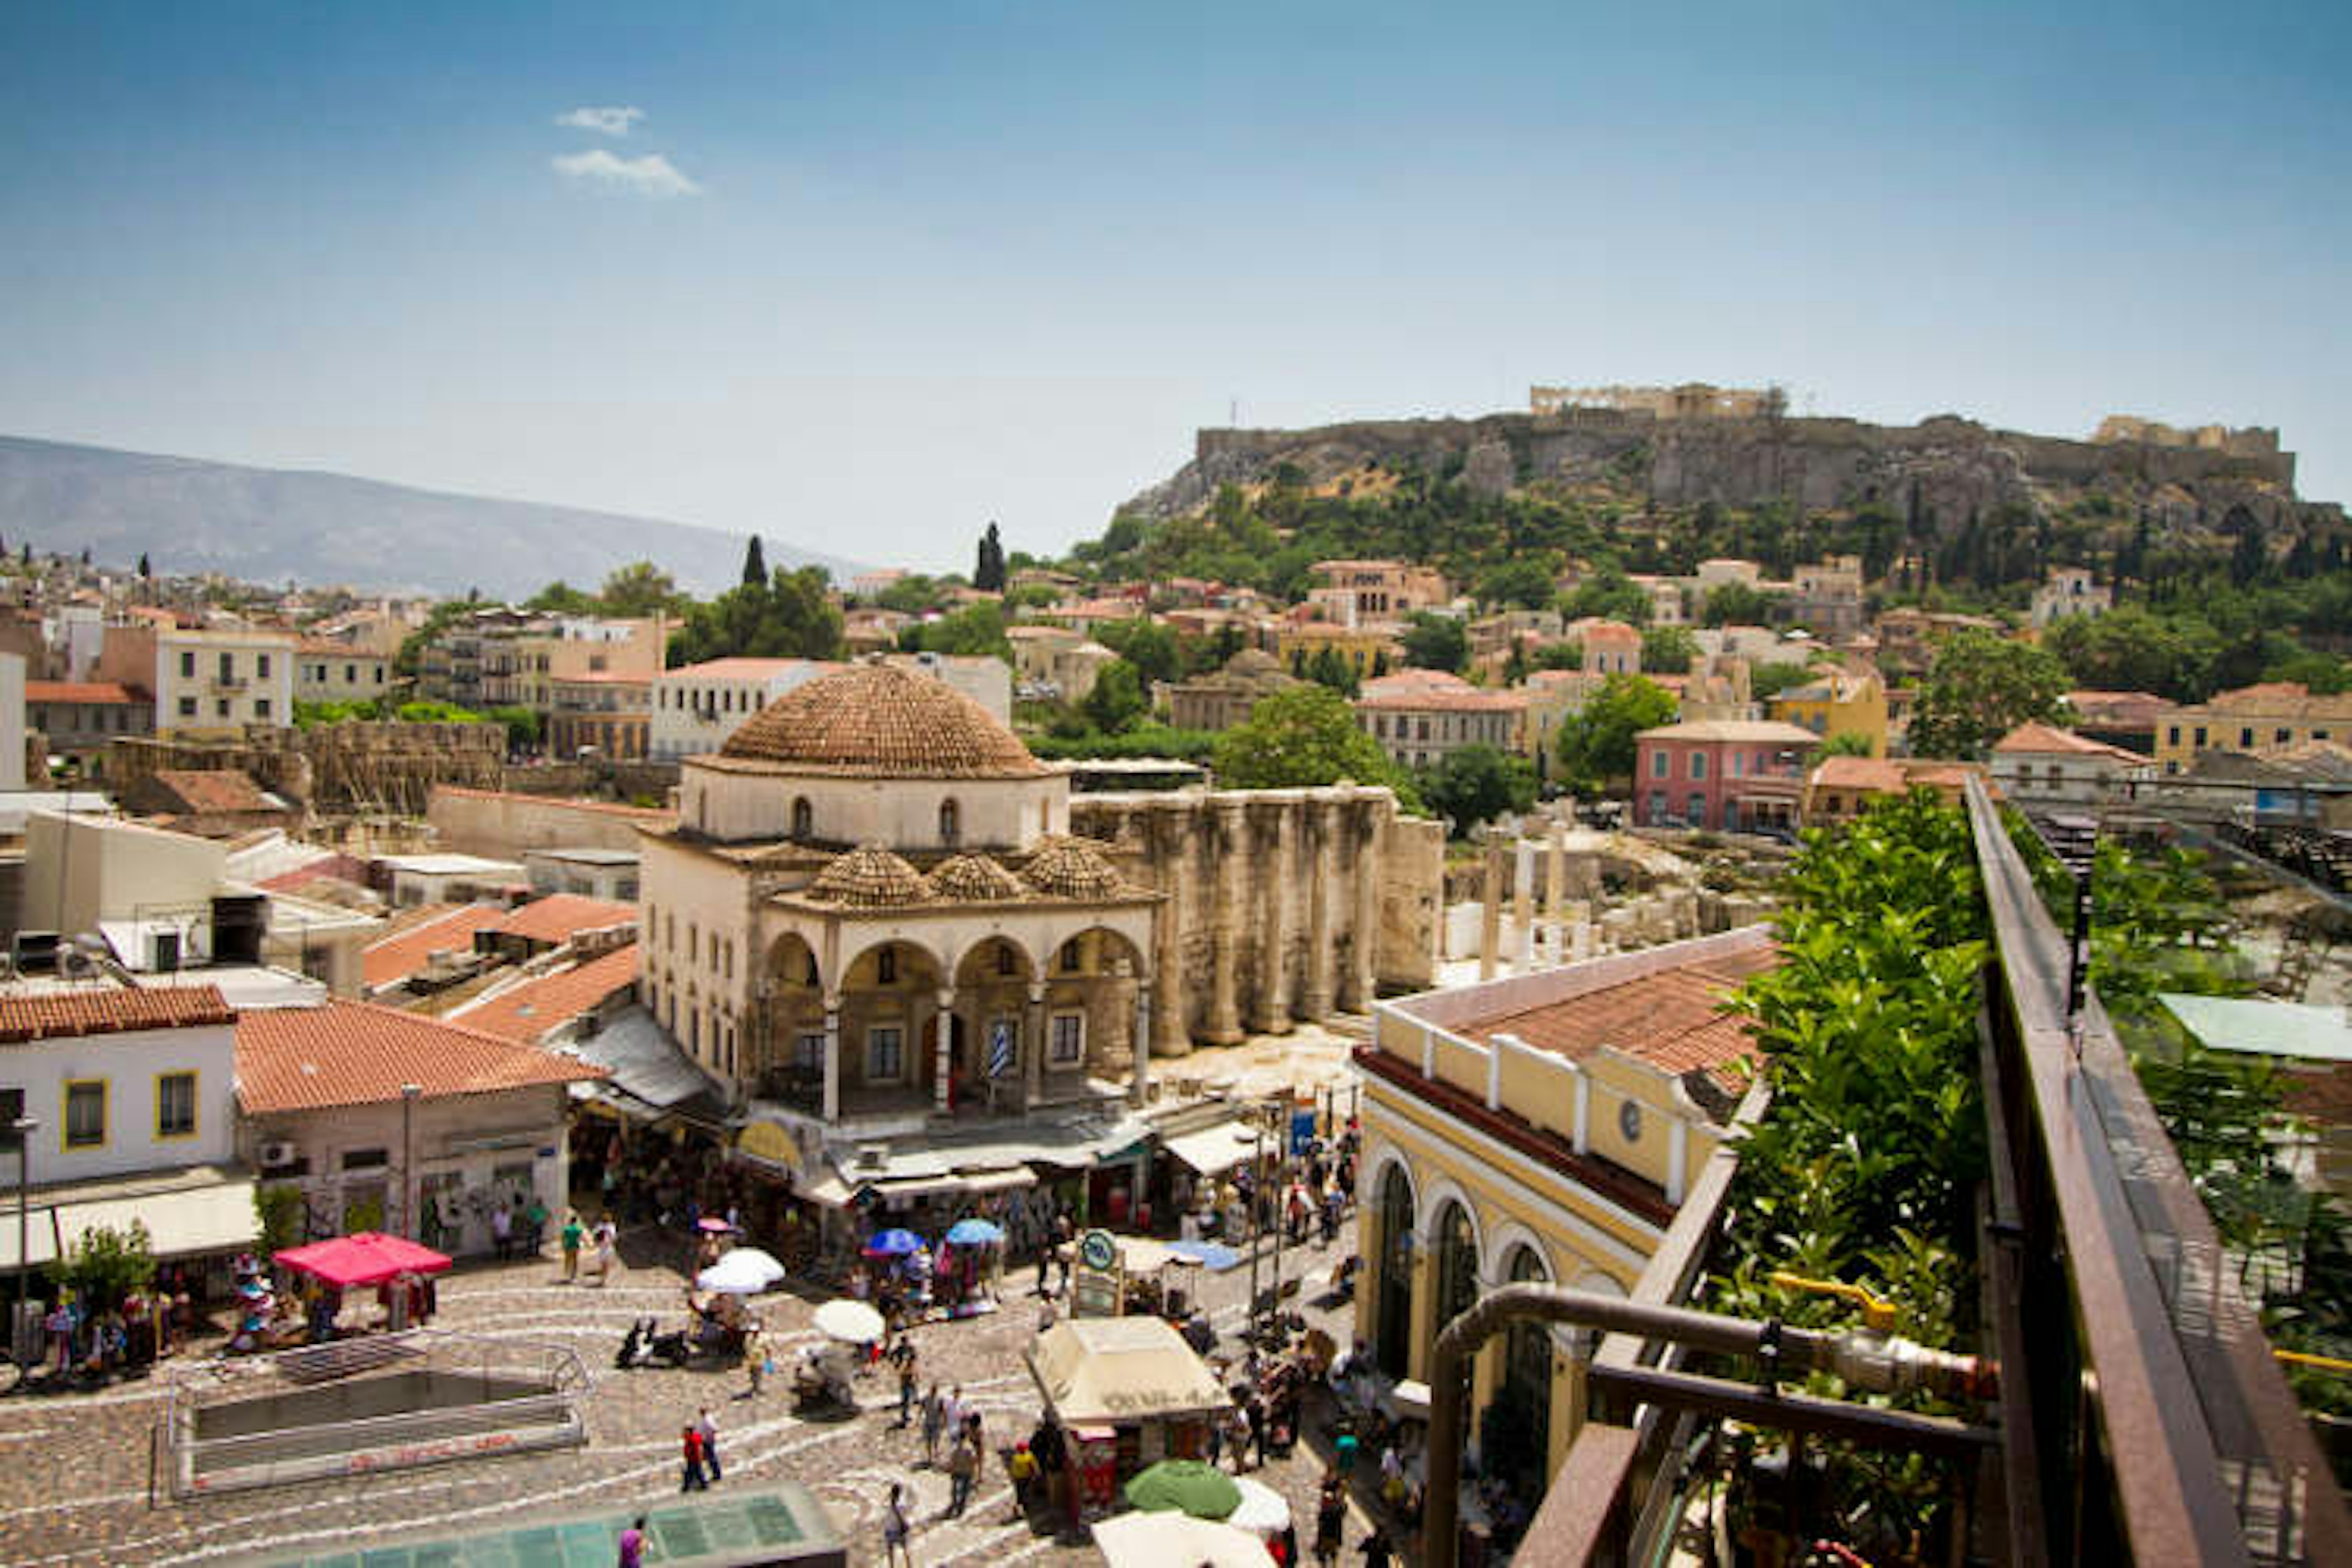 Monastiraki district of Athens, overlooked by the Acropolis. Image courtesy of Region of Attica